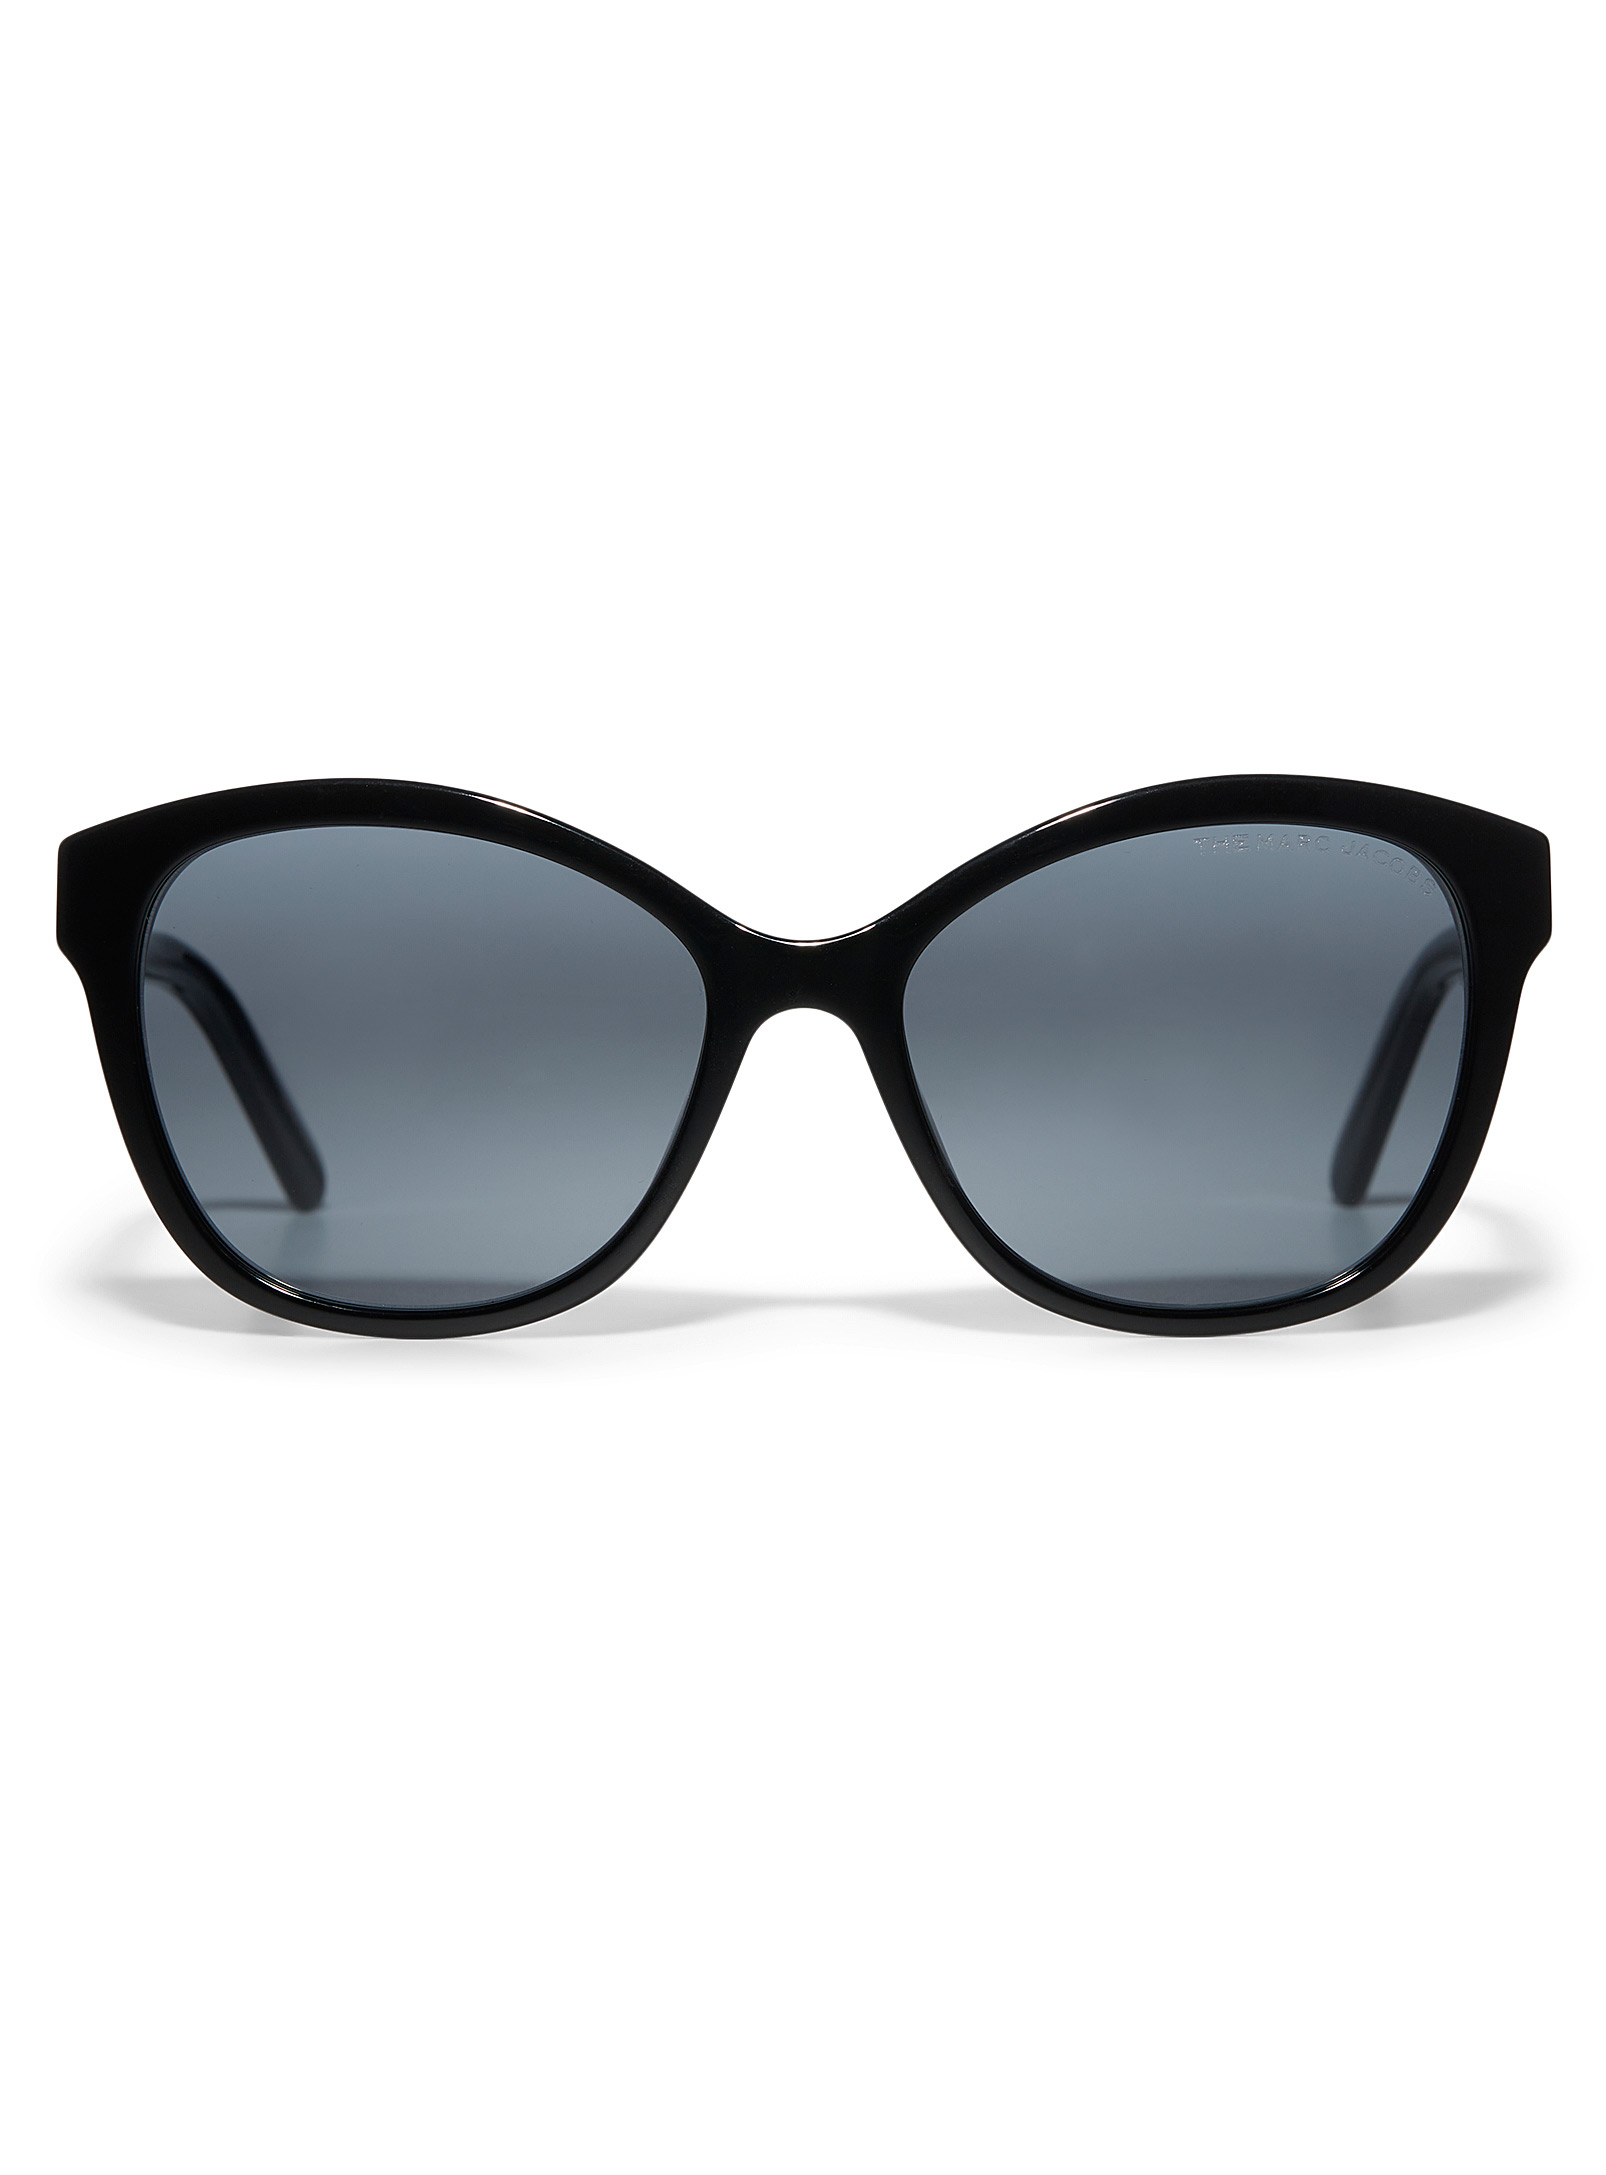 Marc Jacobs - Women's Round tortoiseshell sunglasses